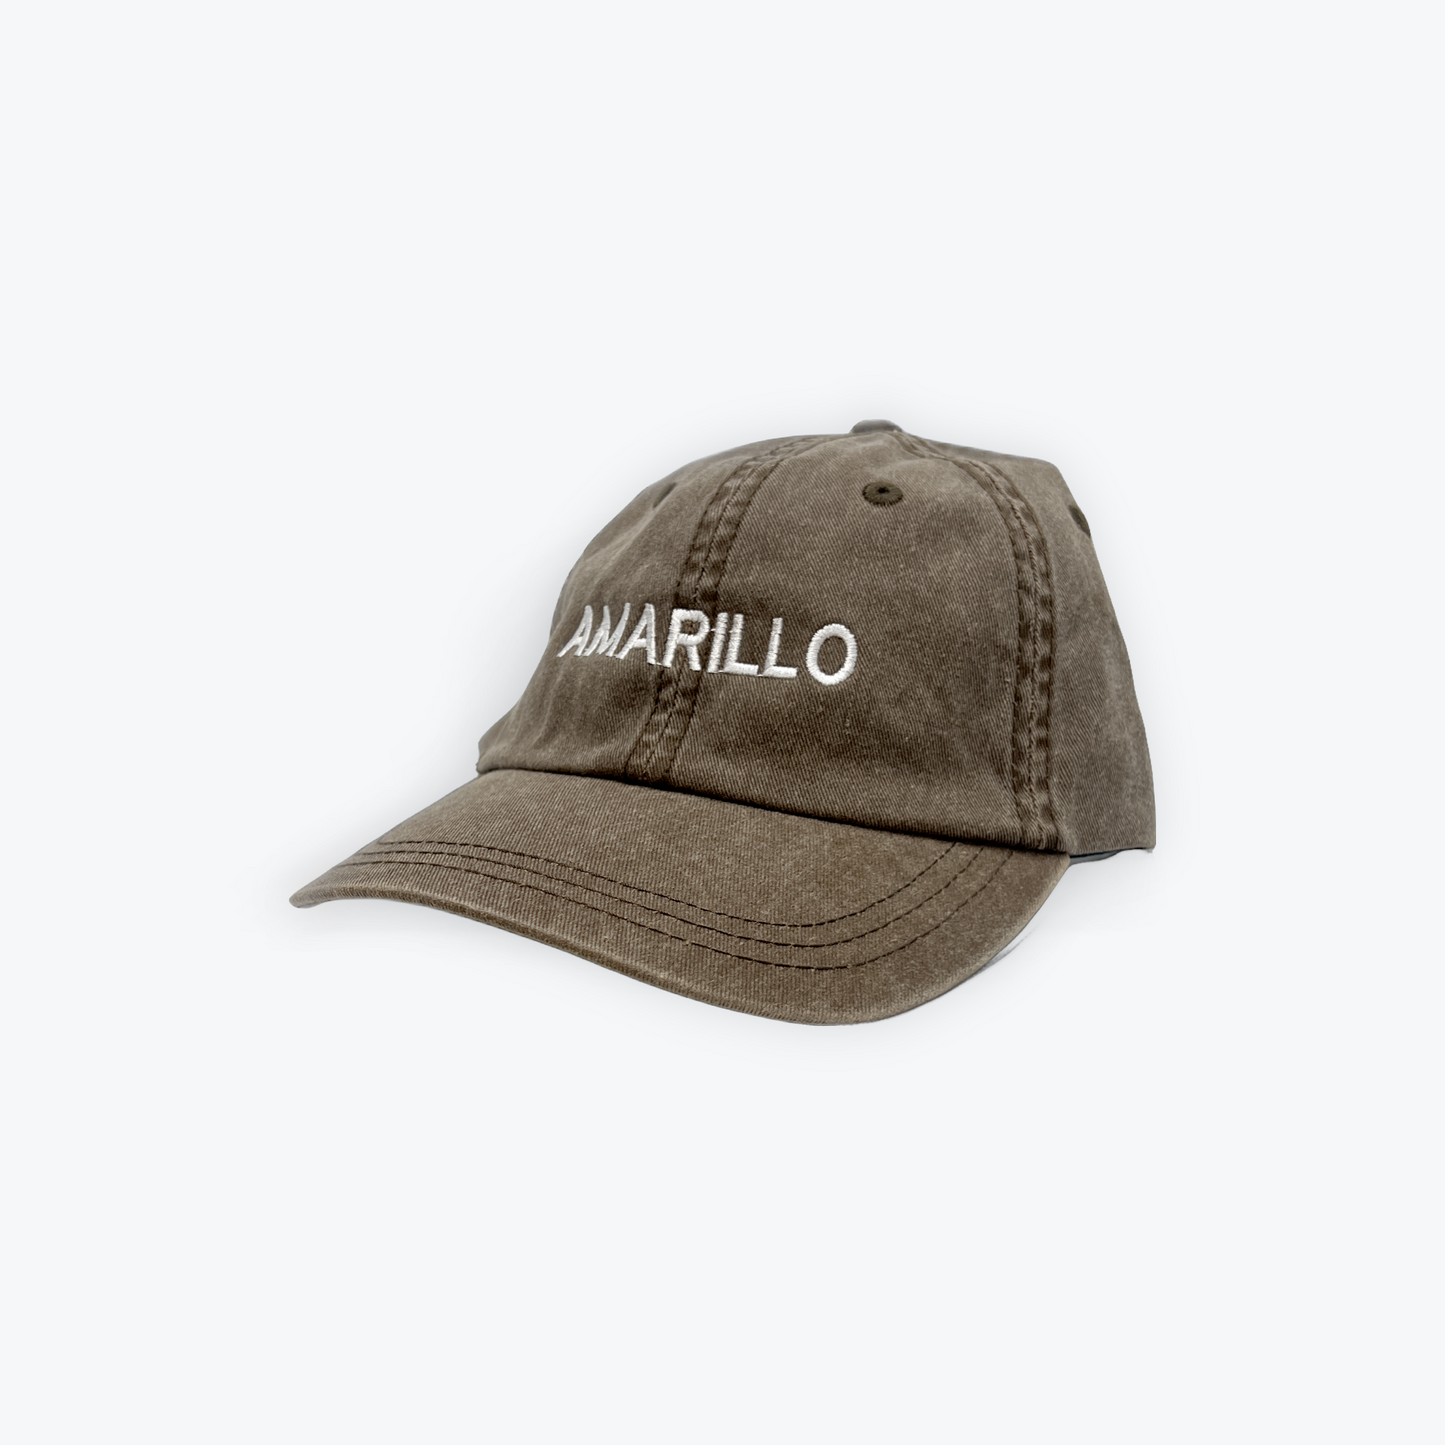 Amarillo Embroidered Hat